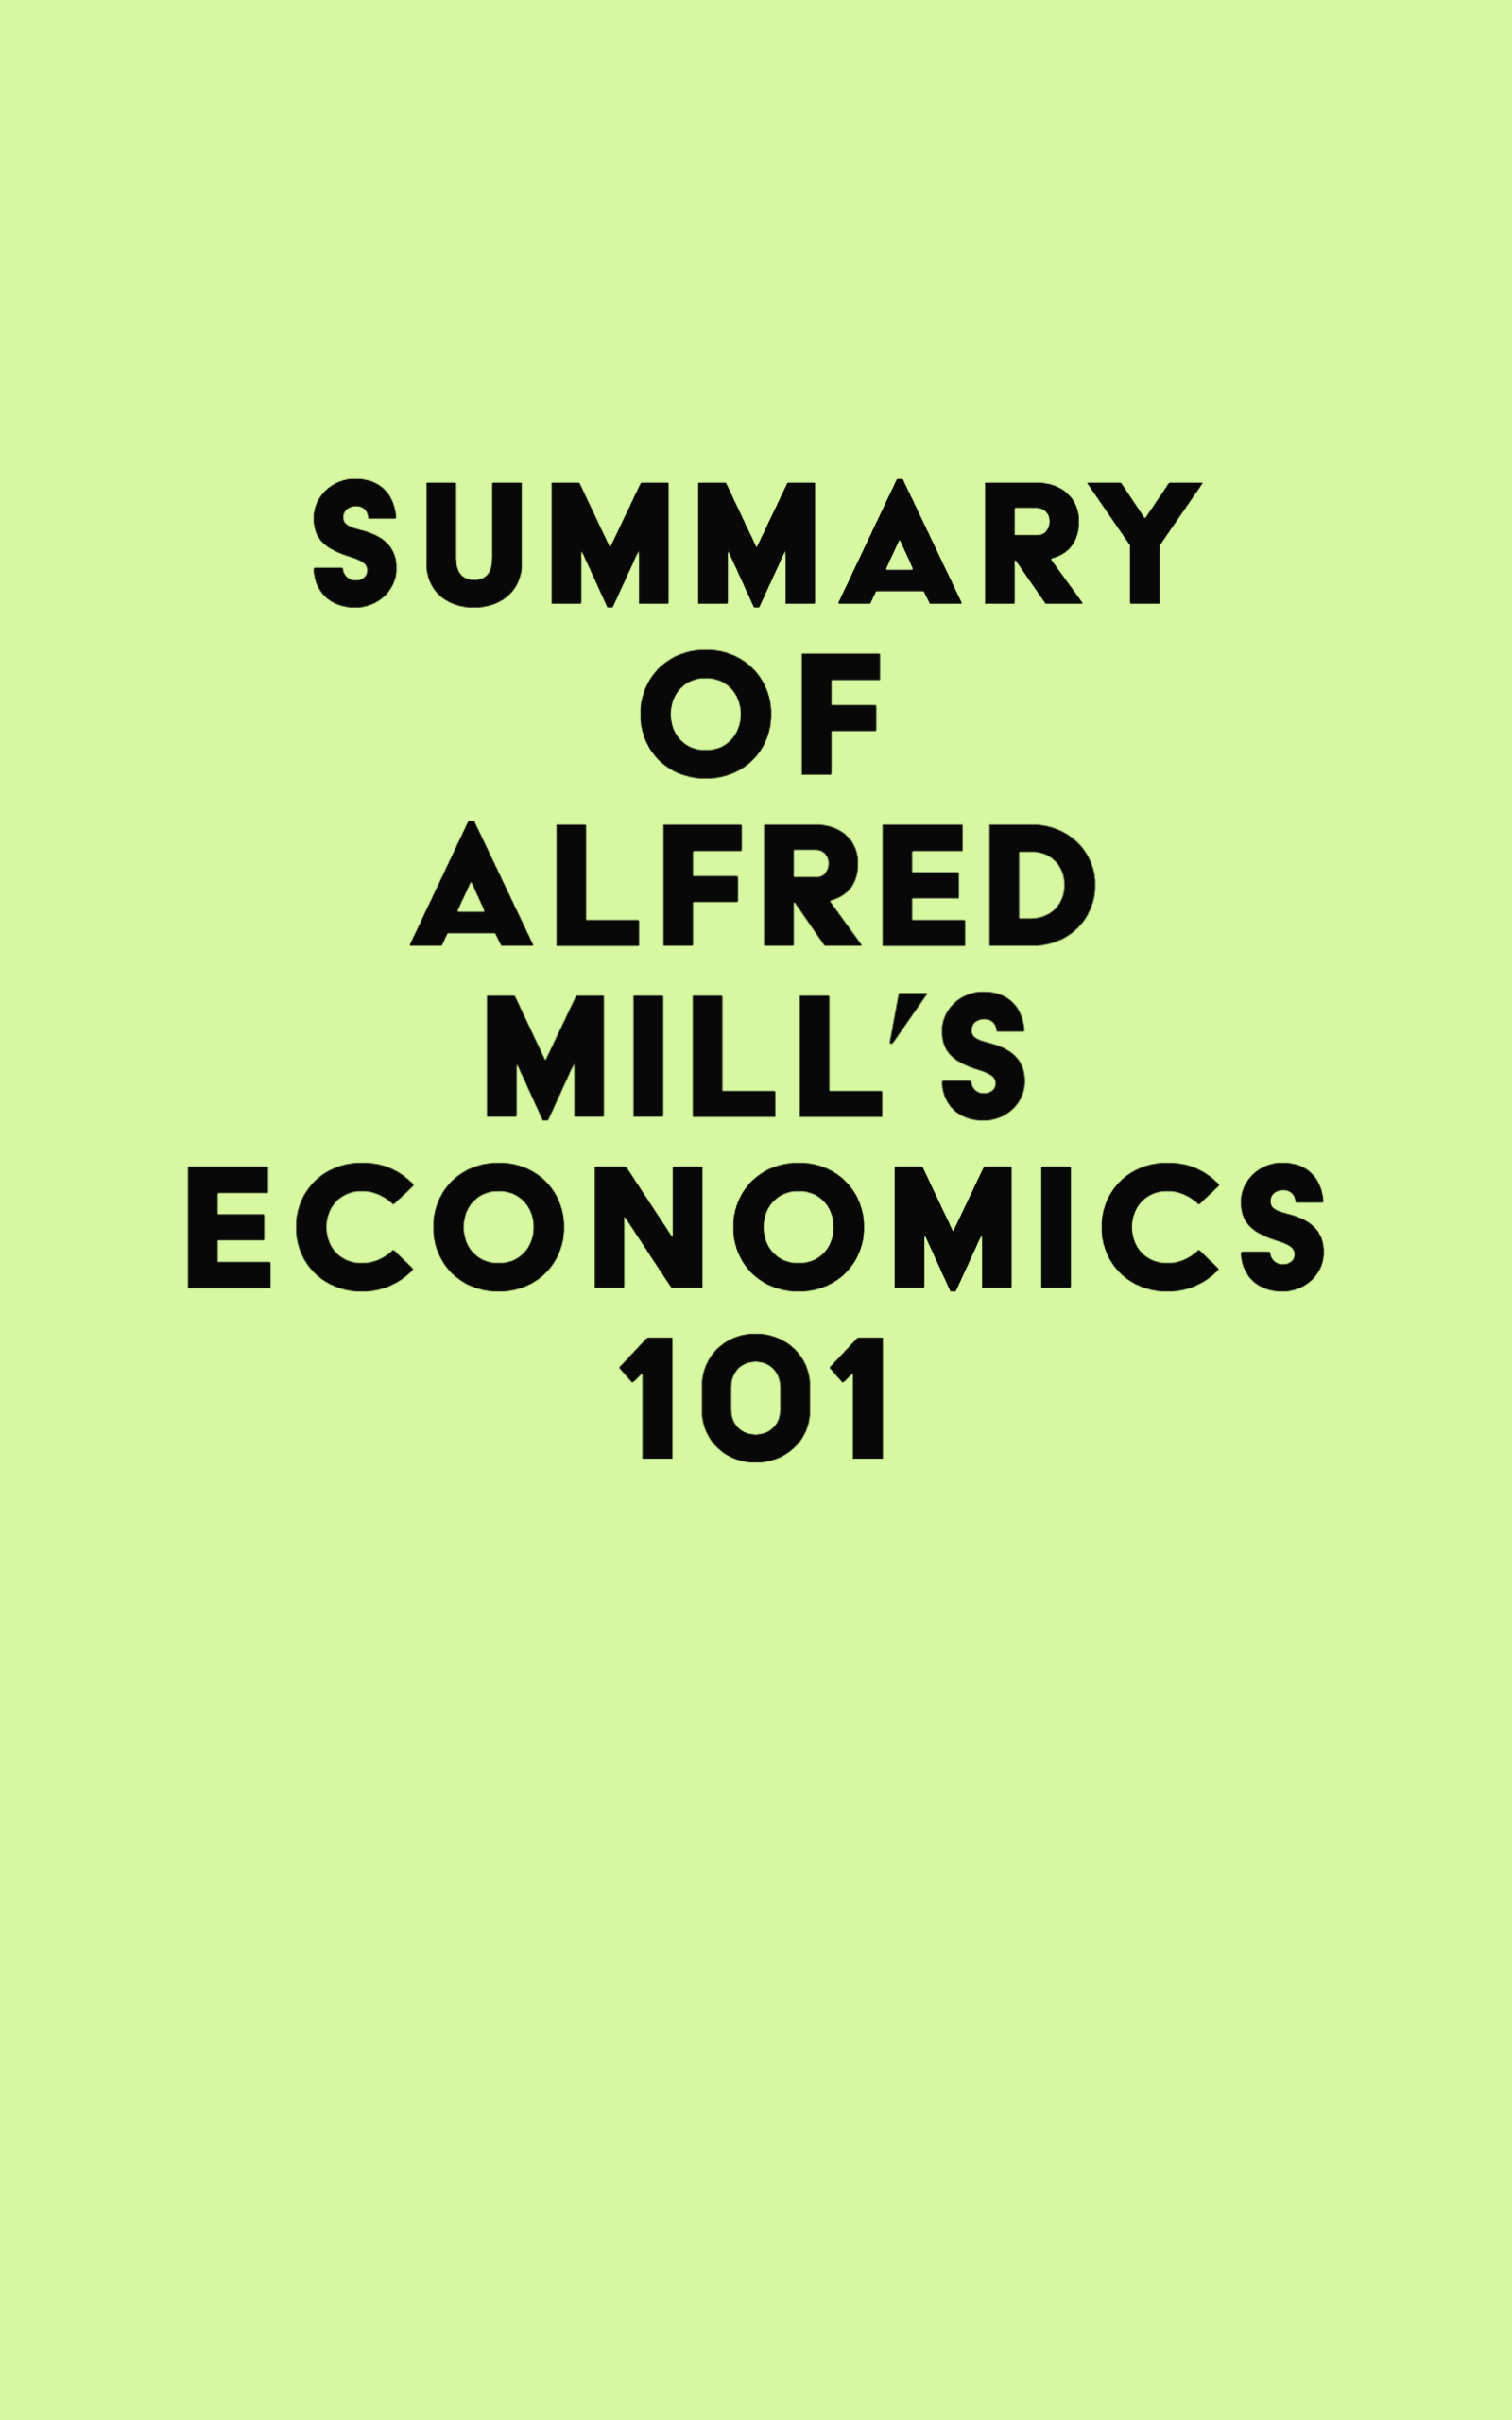 Summary of Alfred Mill's Economics 101